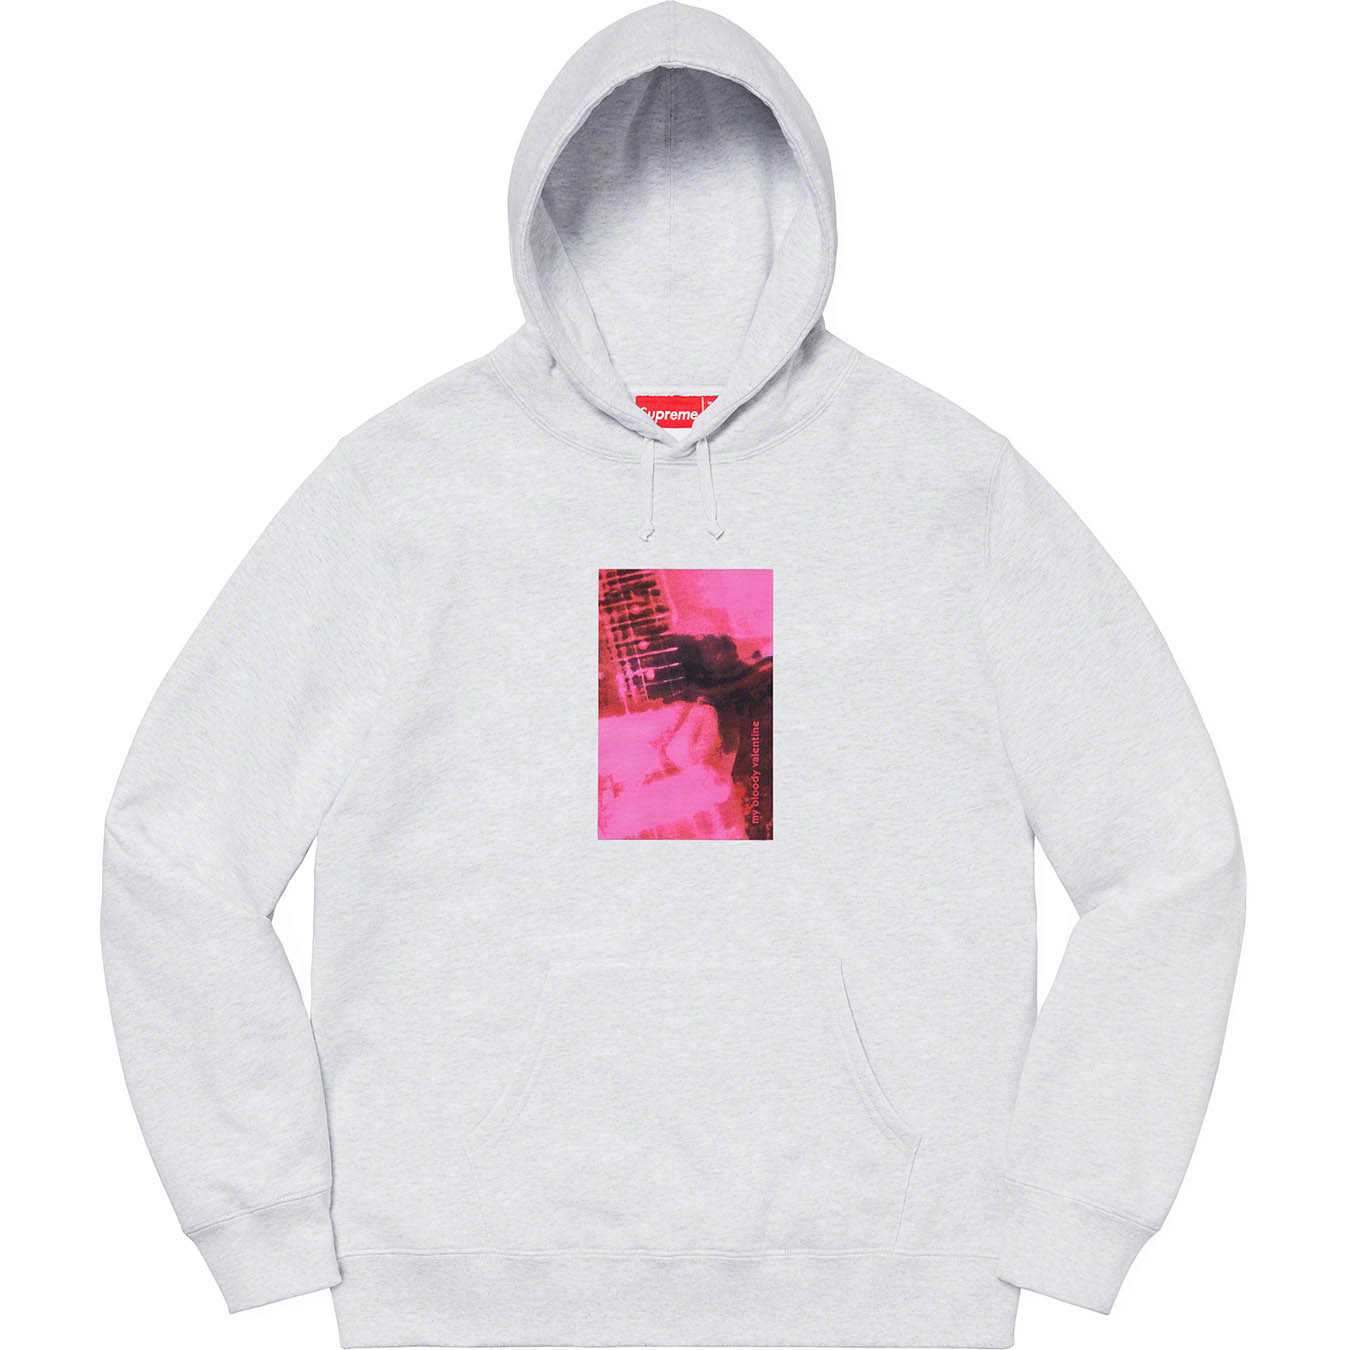 My Bloody Valentine/Supreme Hooded Sweatshirt